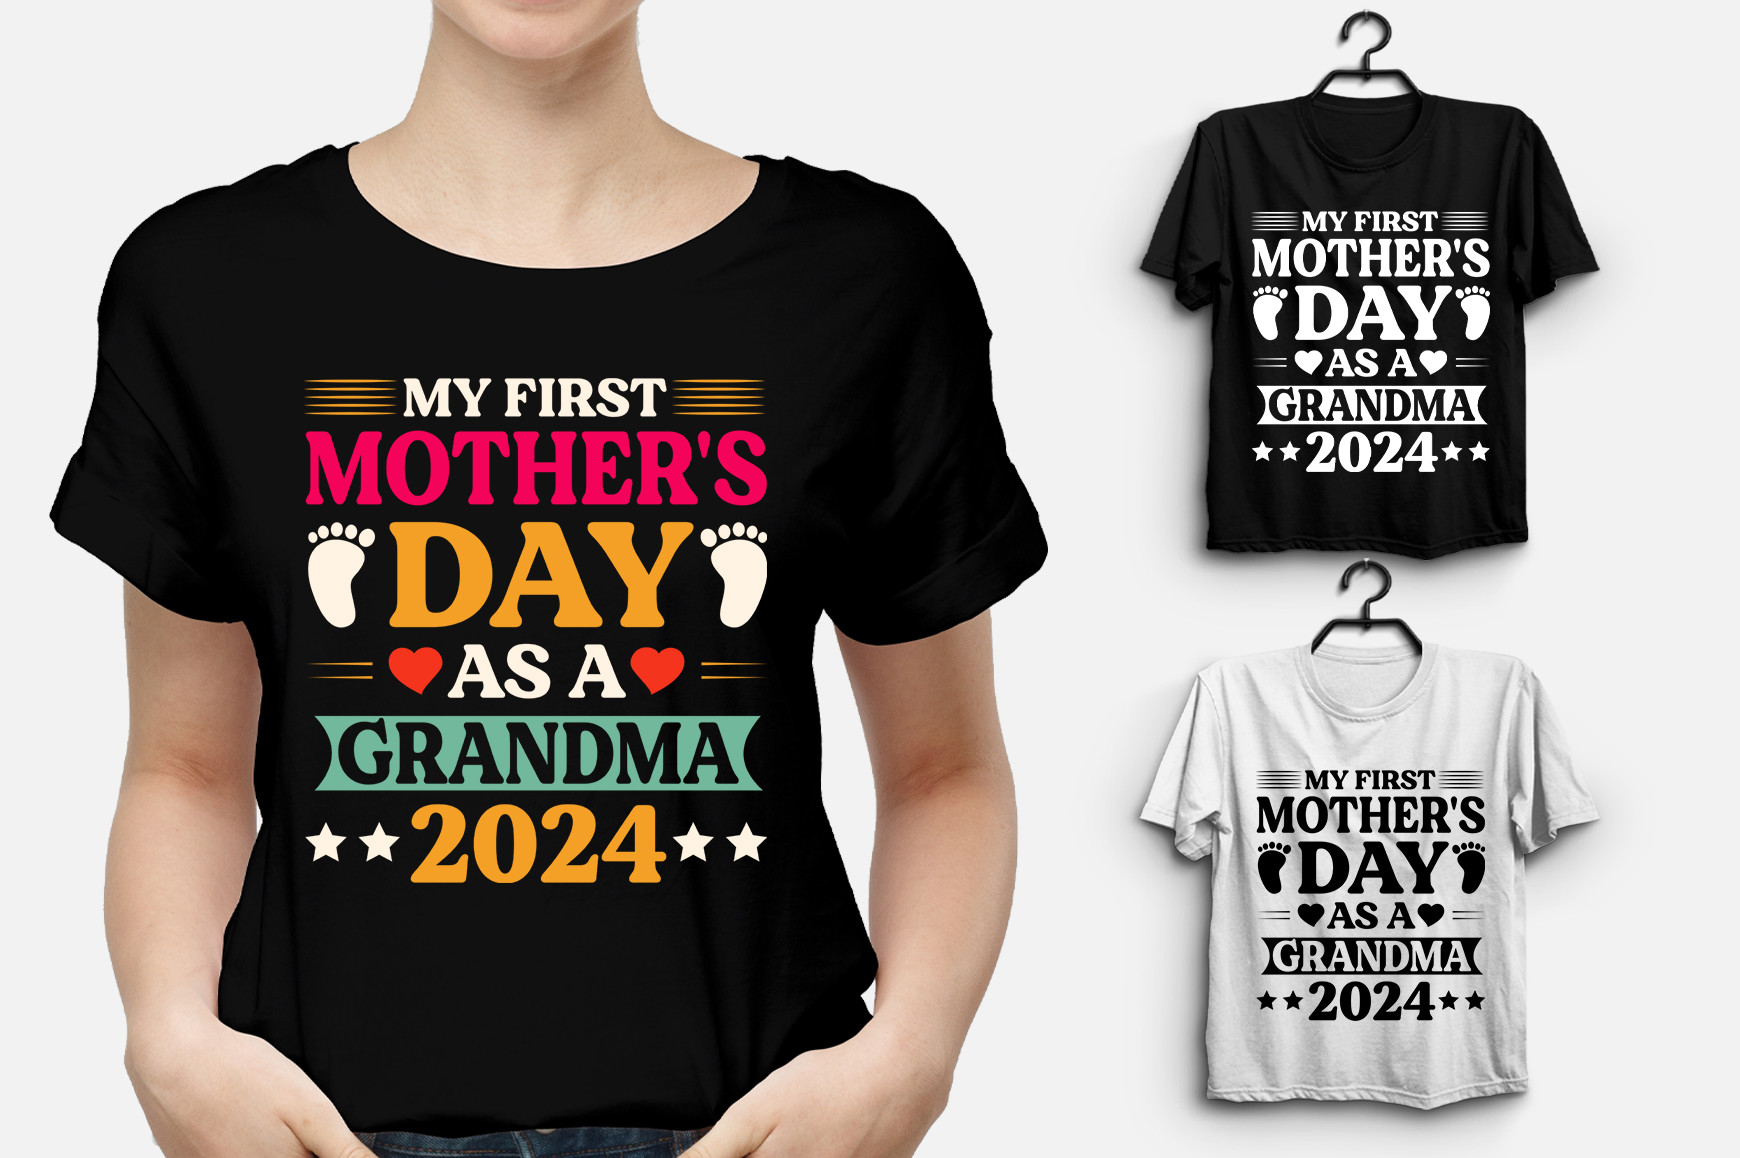 My Mother is My Queen Gráfico por d2putri t shirt design · Creative Fabrica